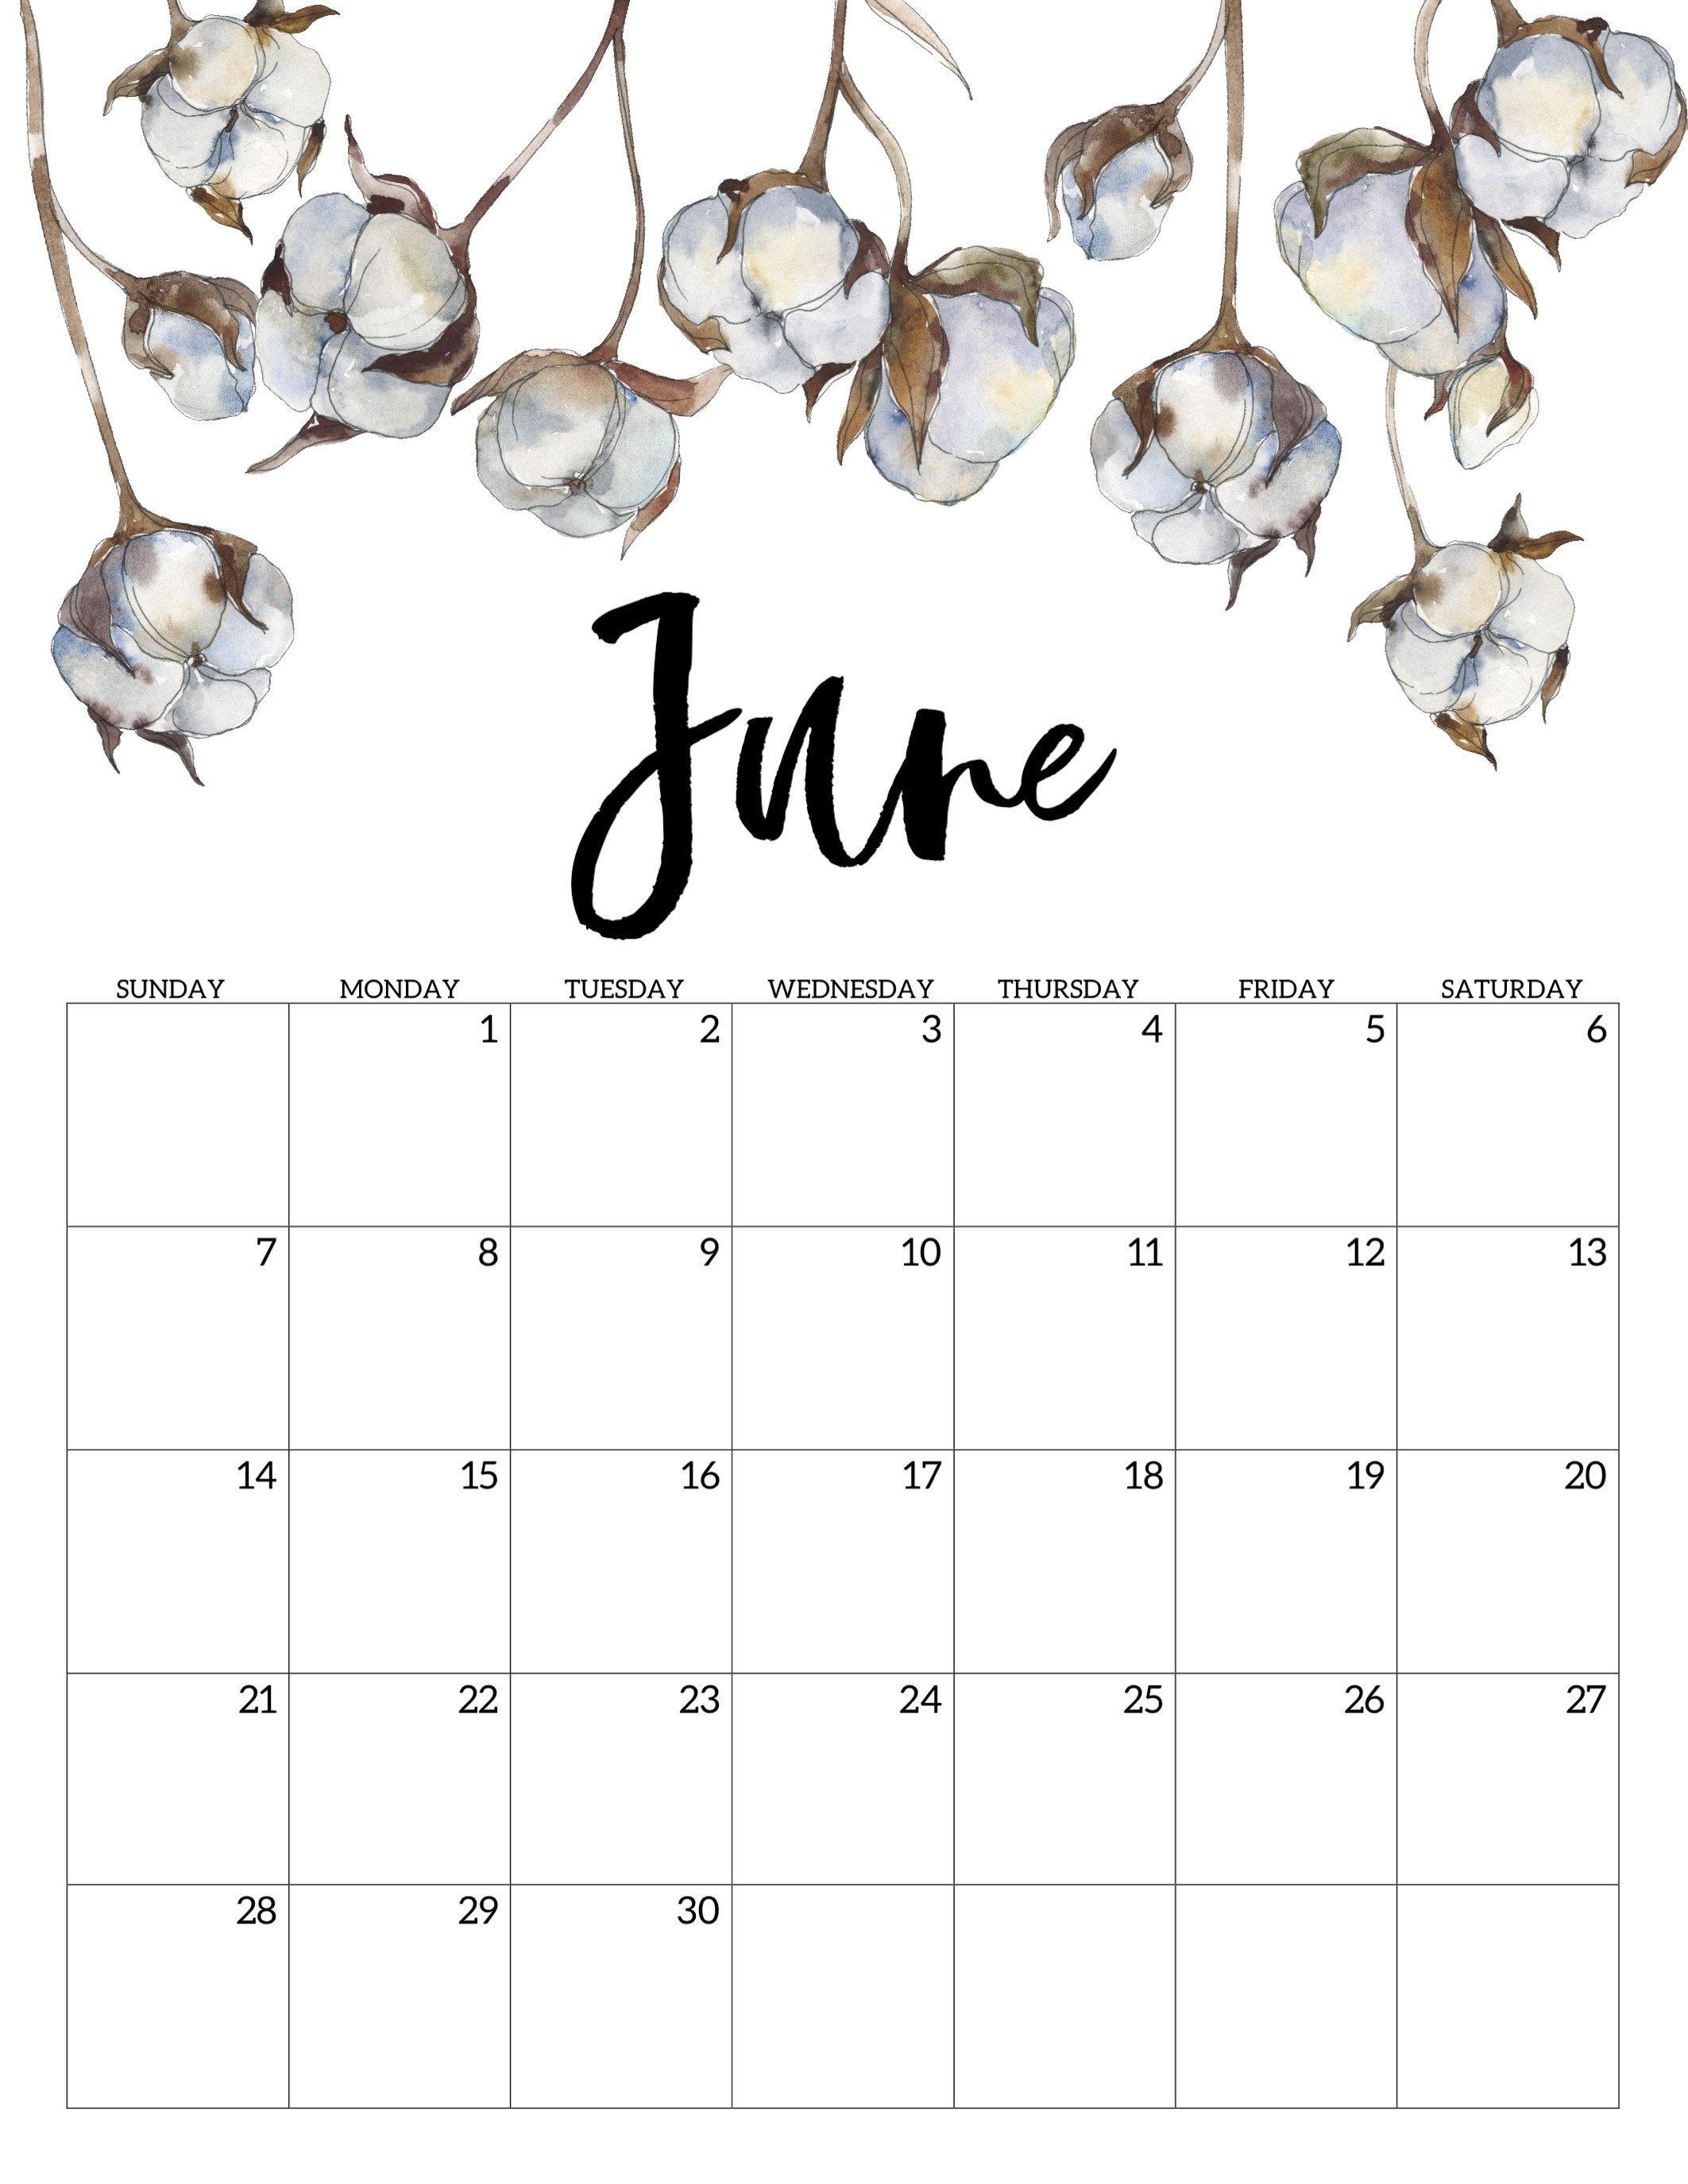 2020 Free Printable Calendar - Floral - Paper Trail Design throughout 2020 Free Printable Calendars Without Downloading